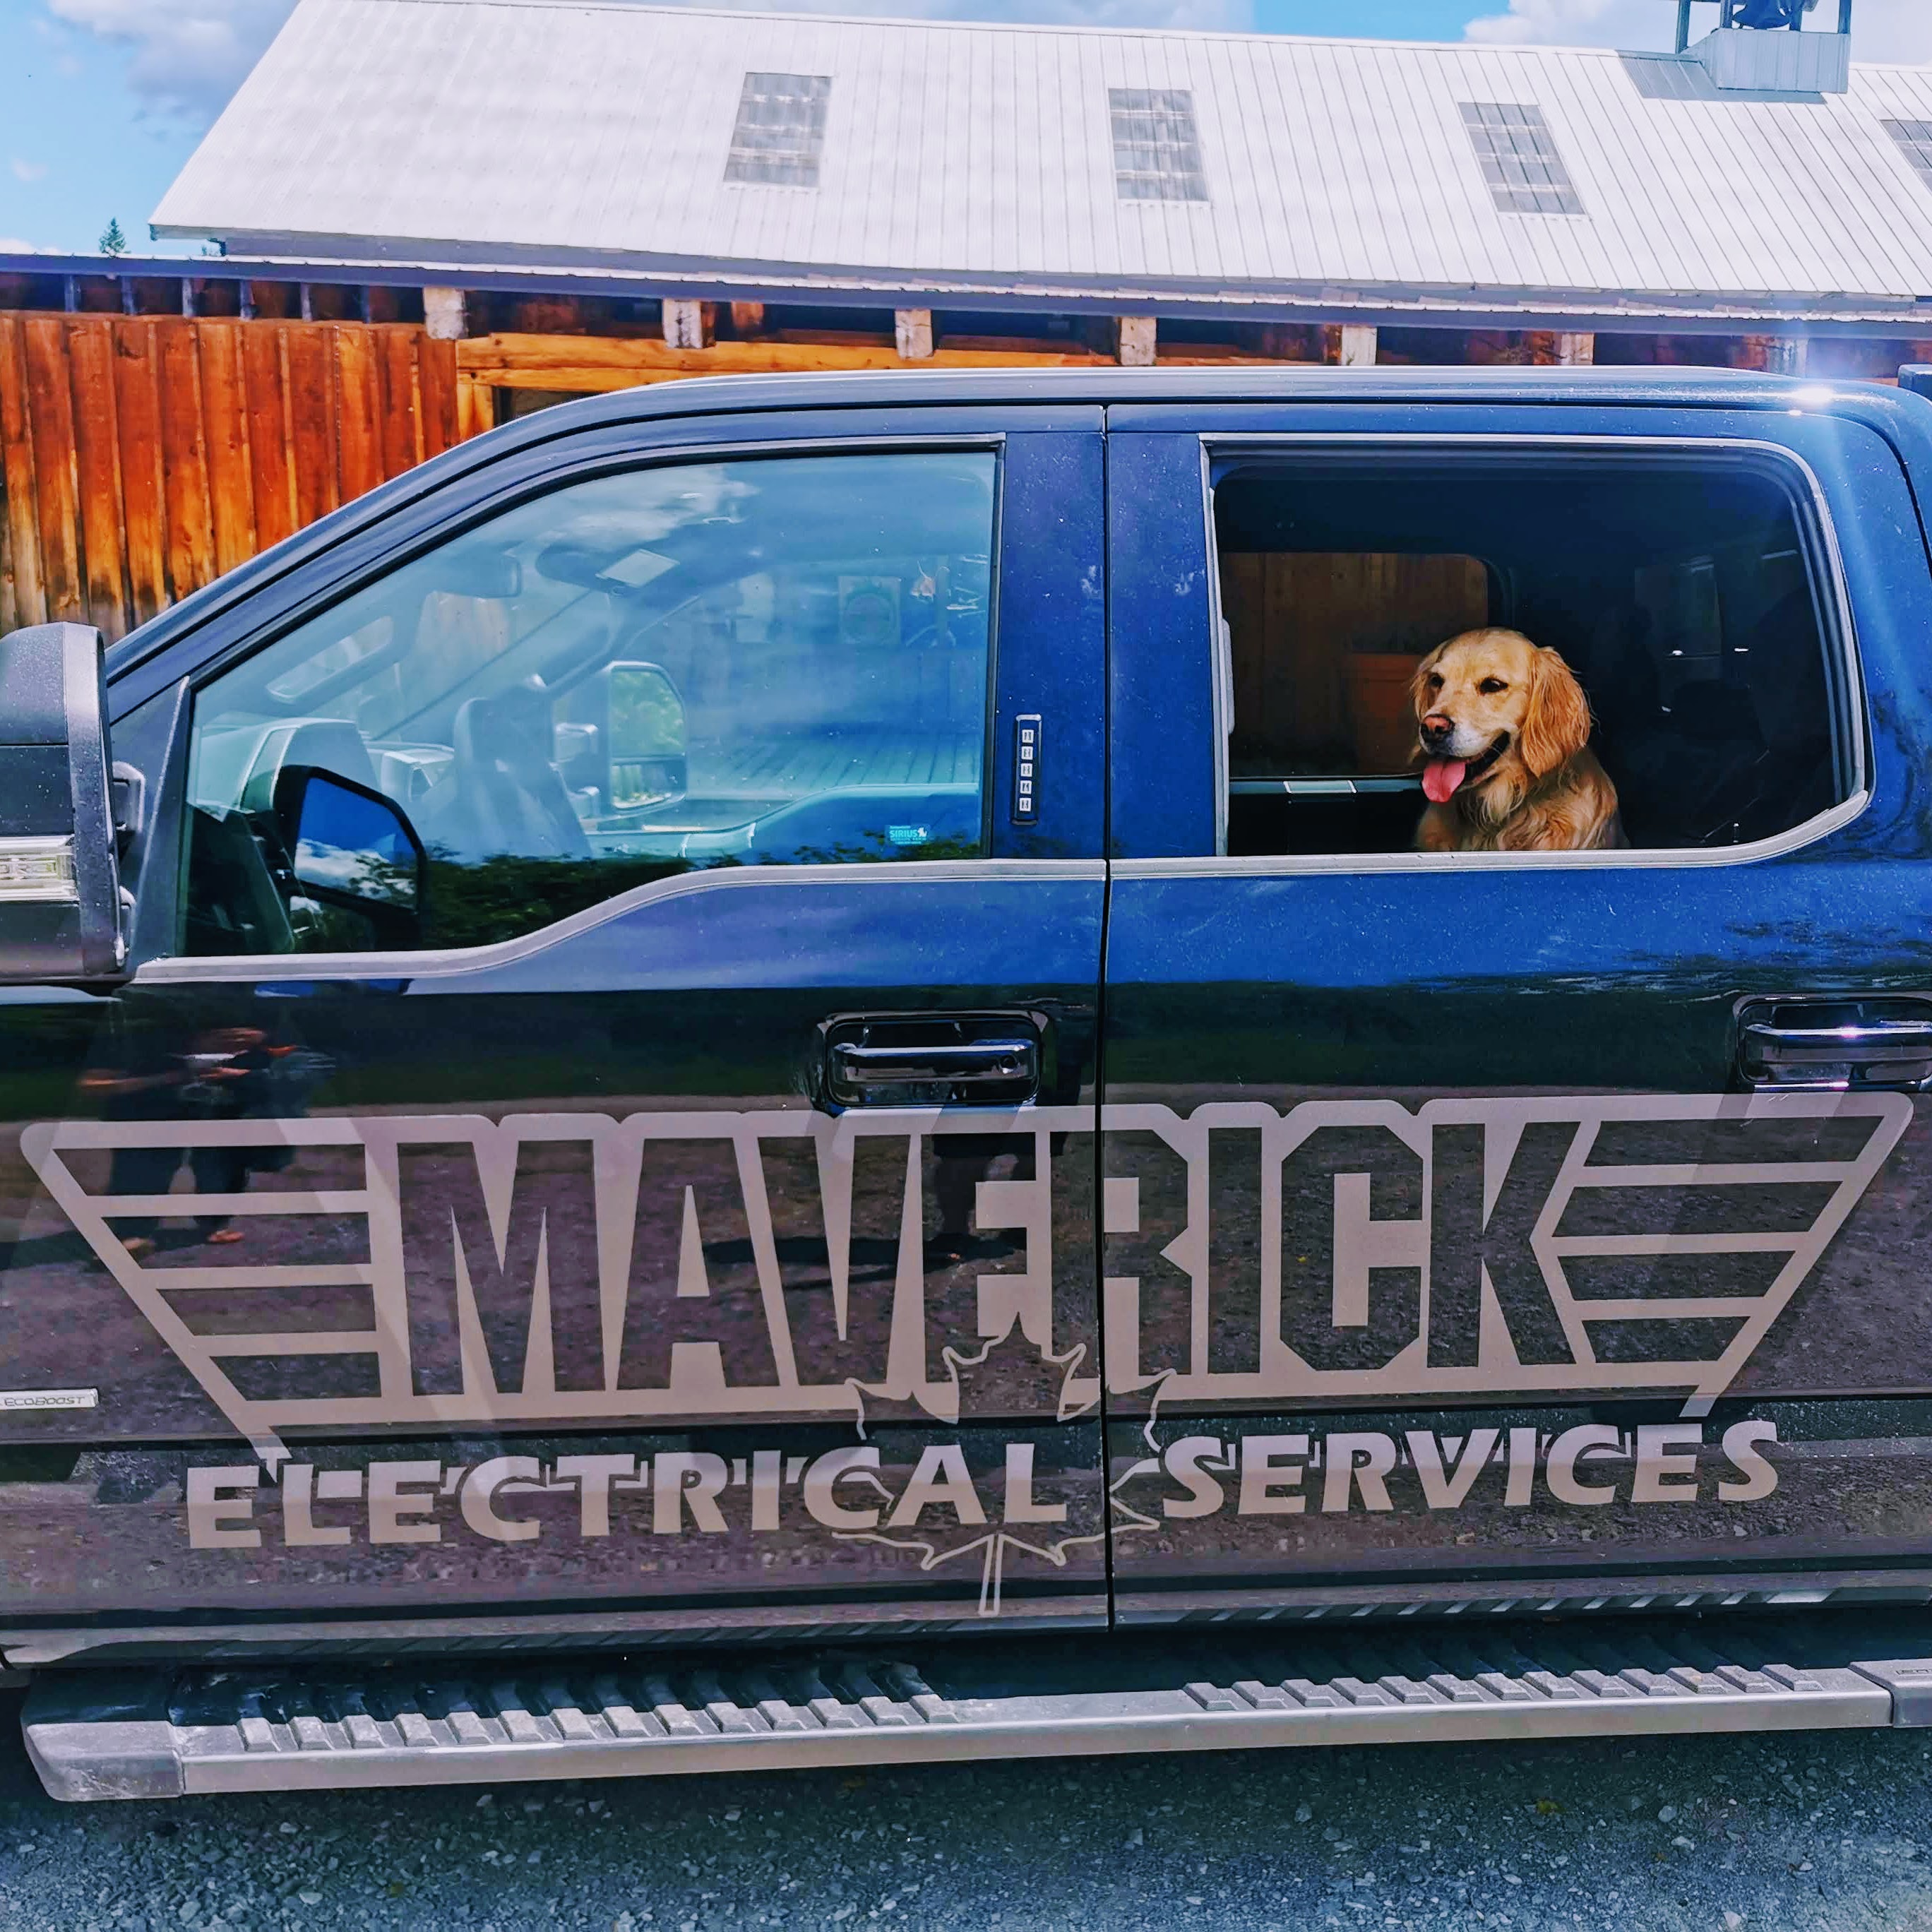 Maverick Electrical Services Truck